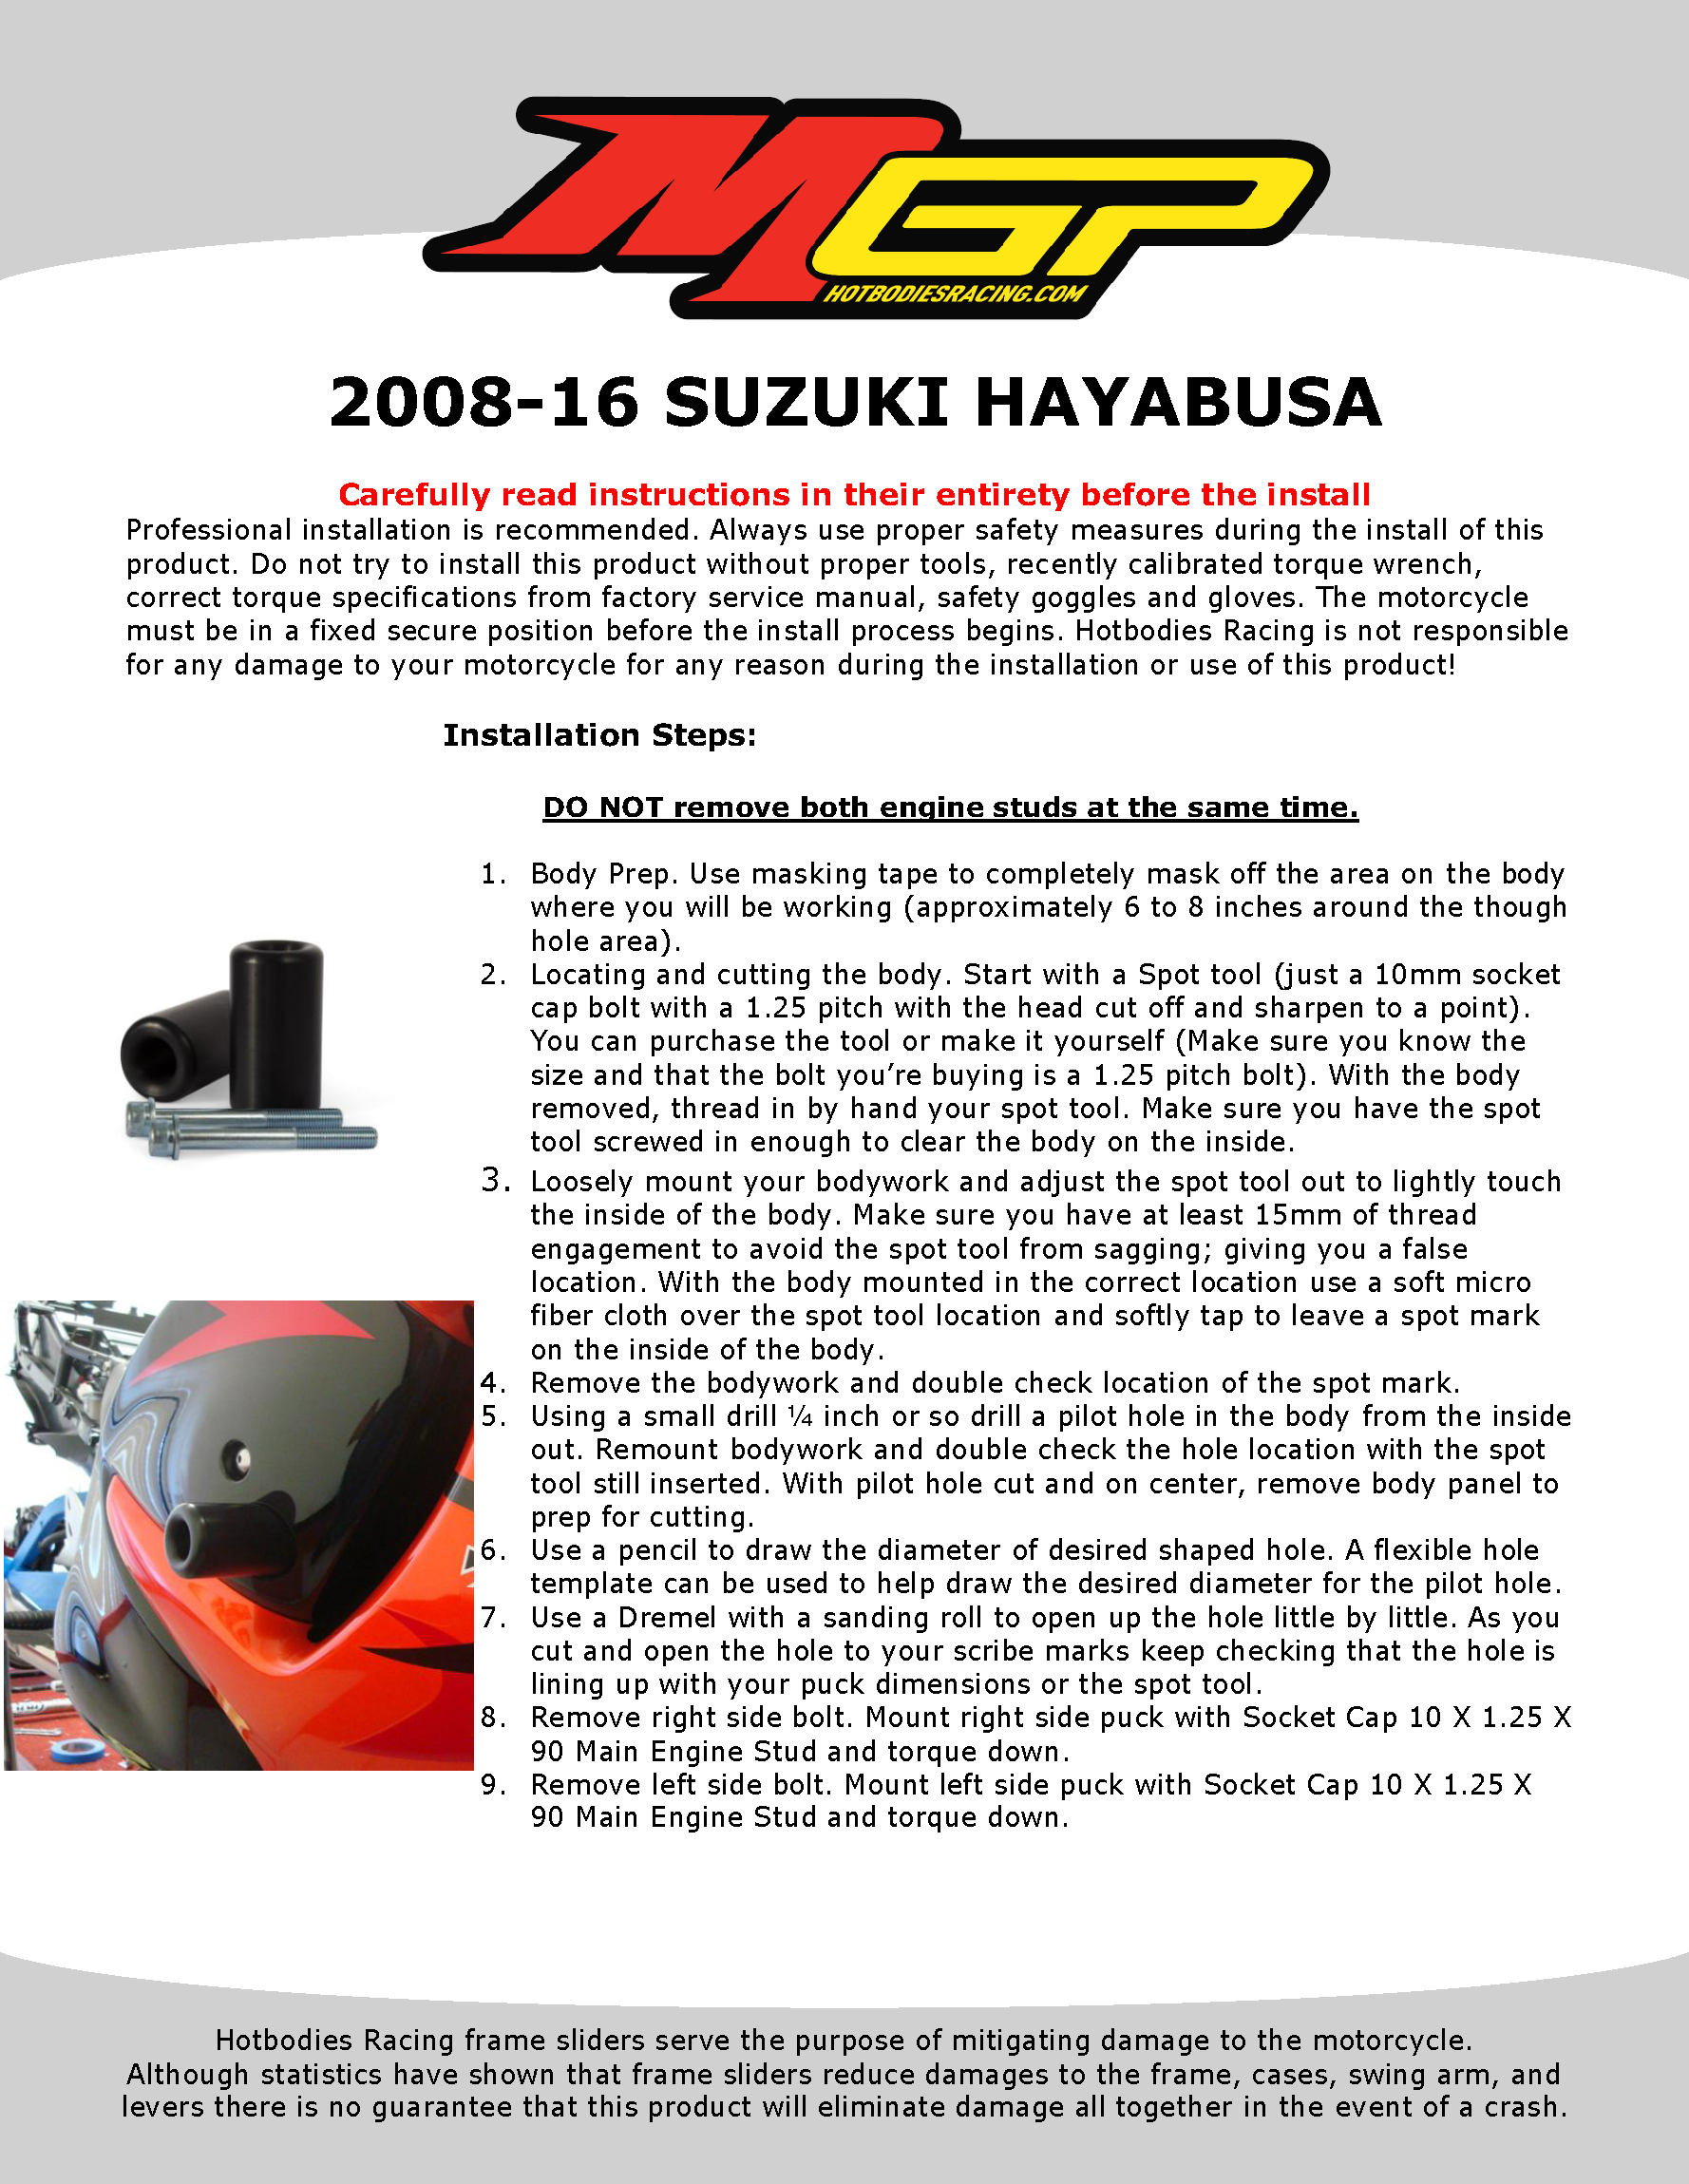 

2008-16 SUZUKI HAYABUSA frame Slider

